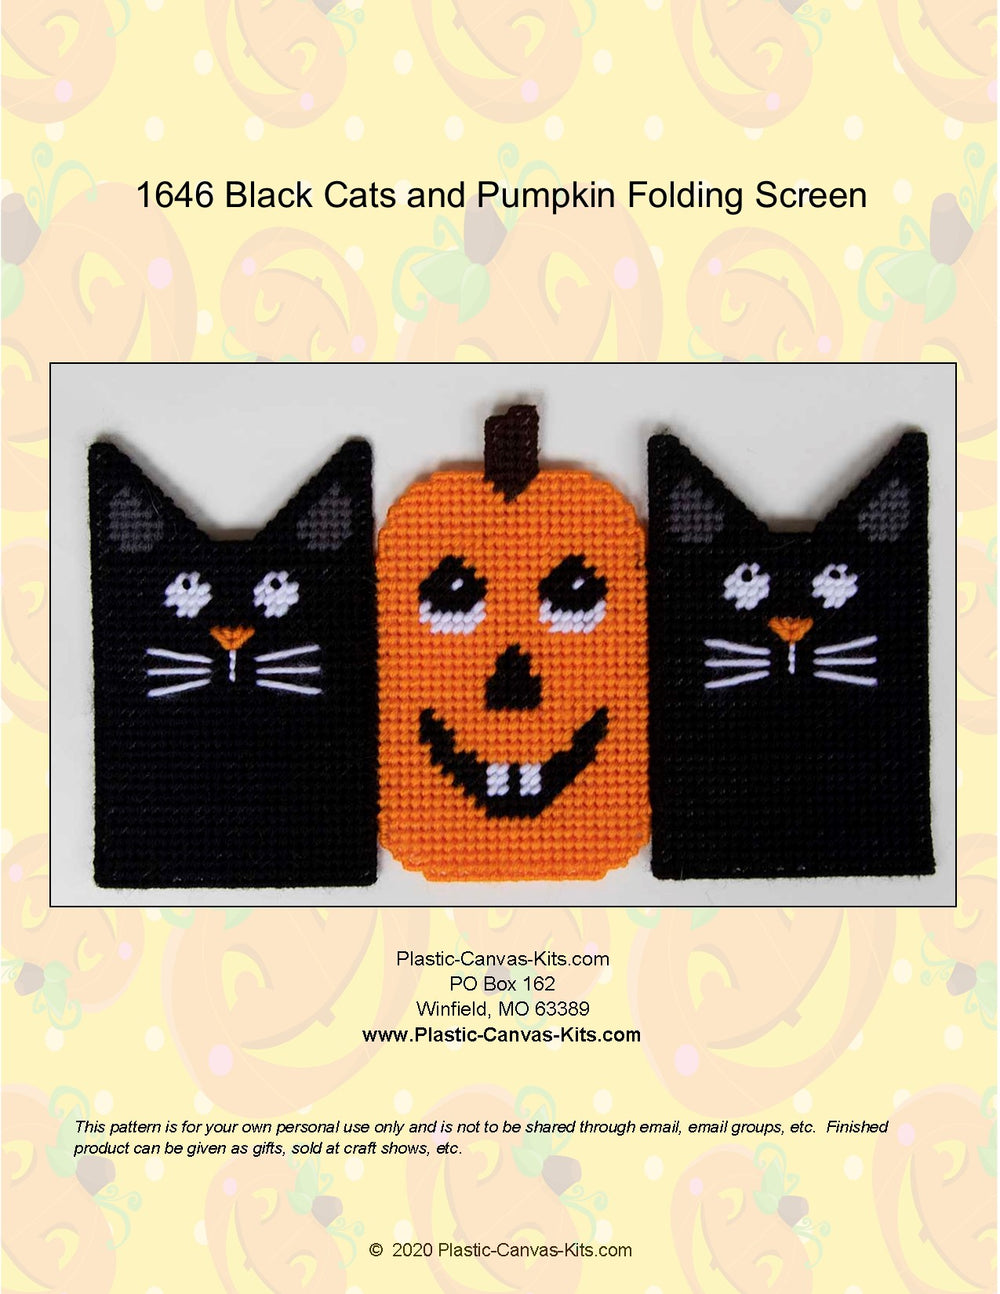 Black Cats and Pumpkin Folding Screen